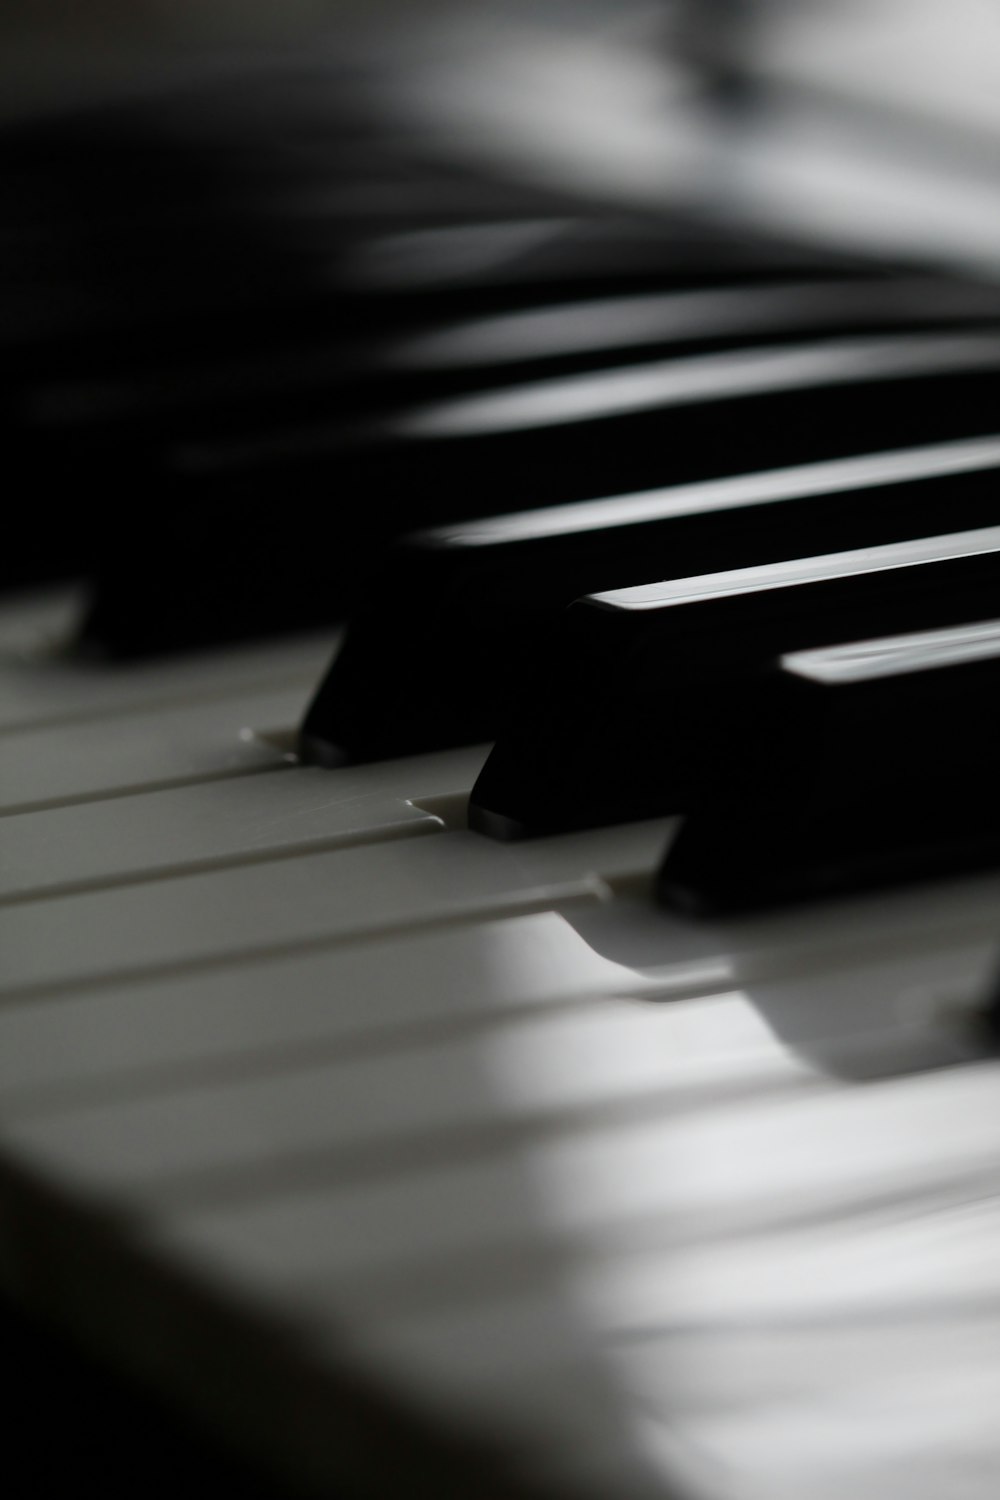 black and white piano keys photo – Free Piano Image on Unsplash